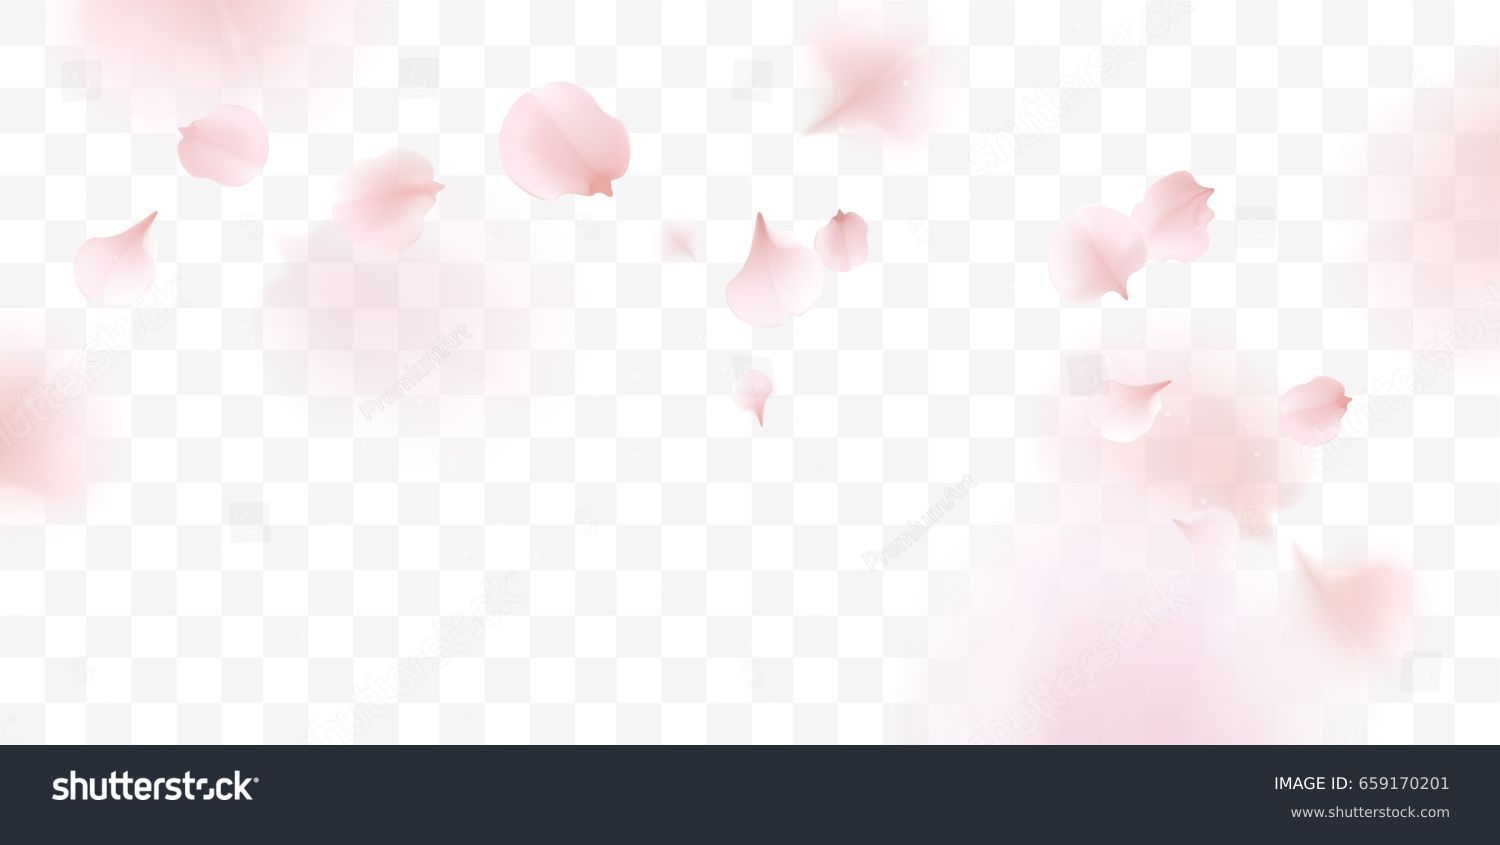 Pink sakura falling petals vector background. 3D romantic illustration